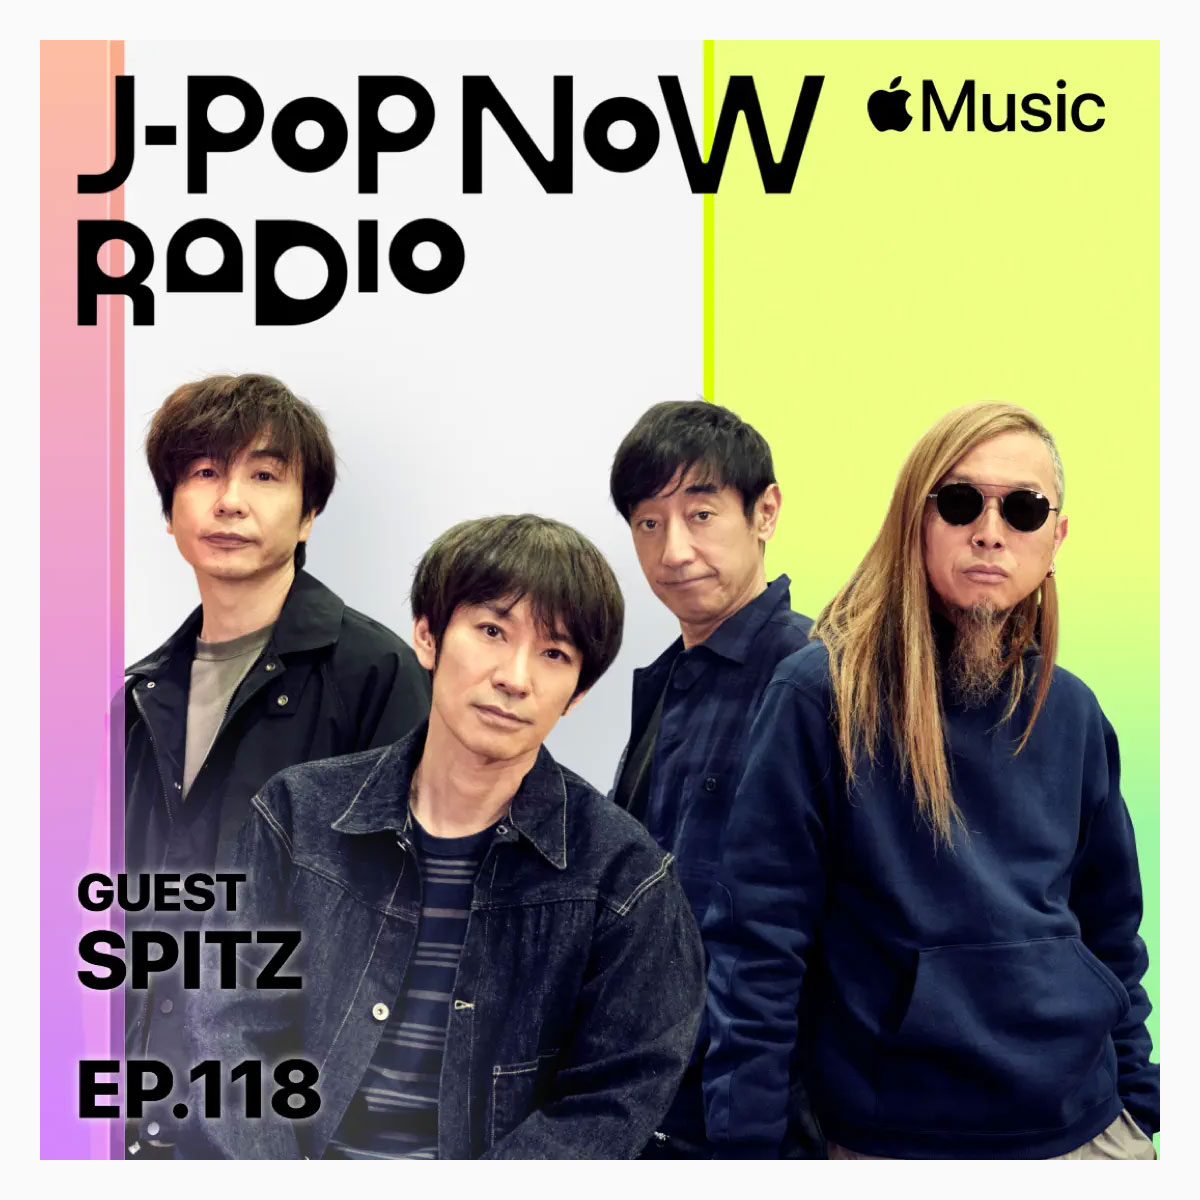 J-Pop Now Radio with Kentaro Ochiai ゲスト：スピッツ